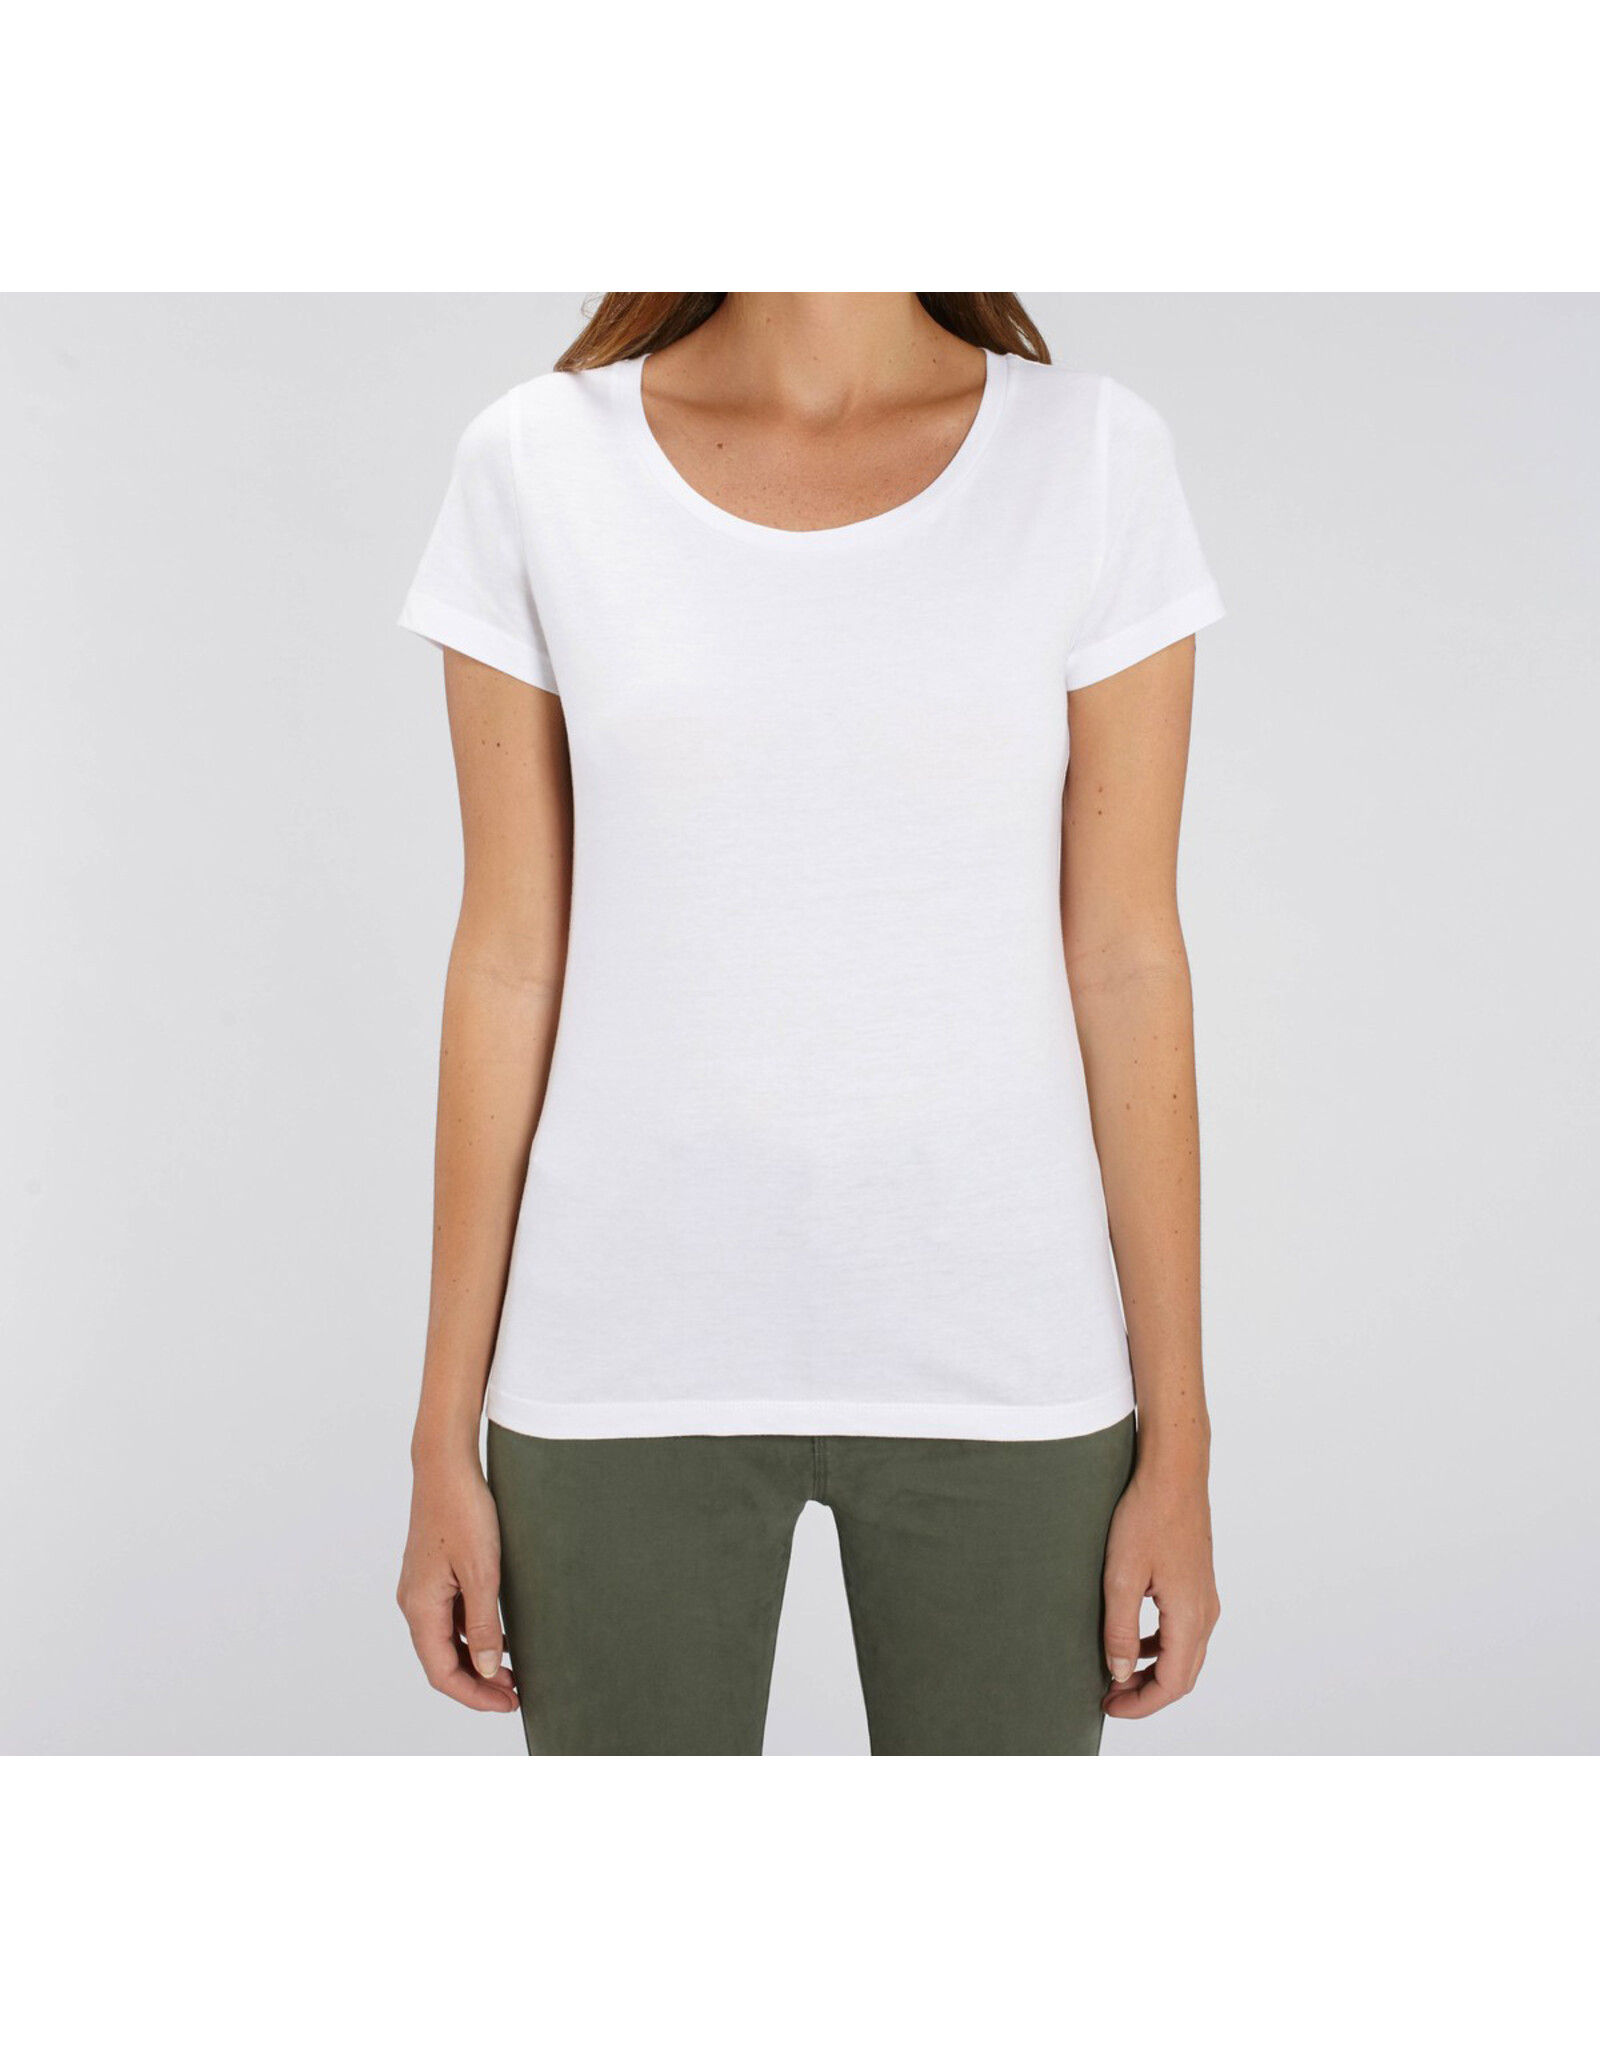 Shiba Boutique Designed for friends Personalized T-Shirt Women